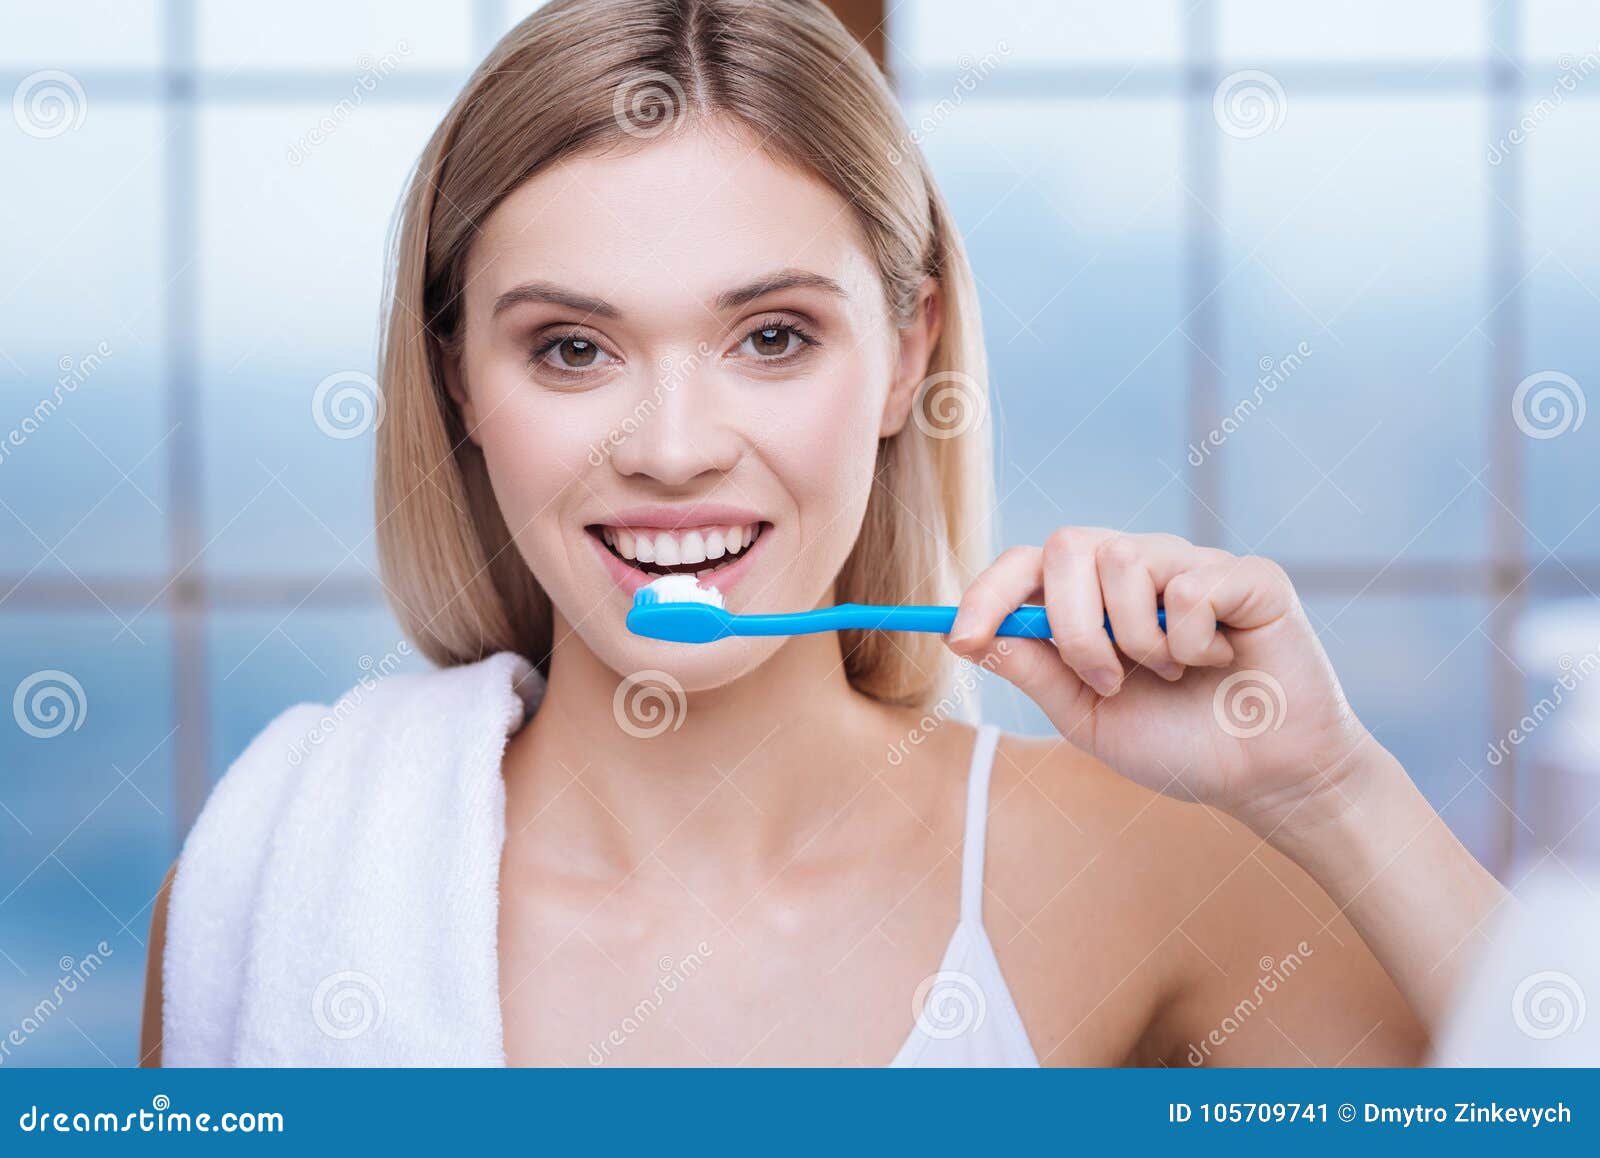 wife brushes her teeth